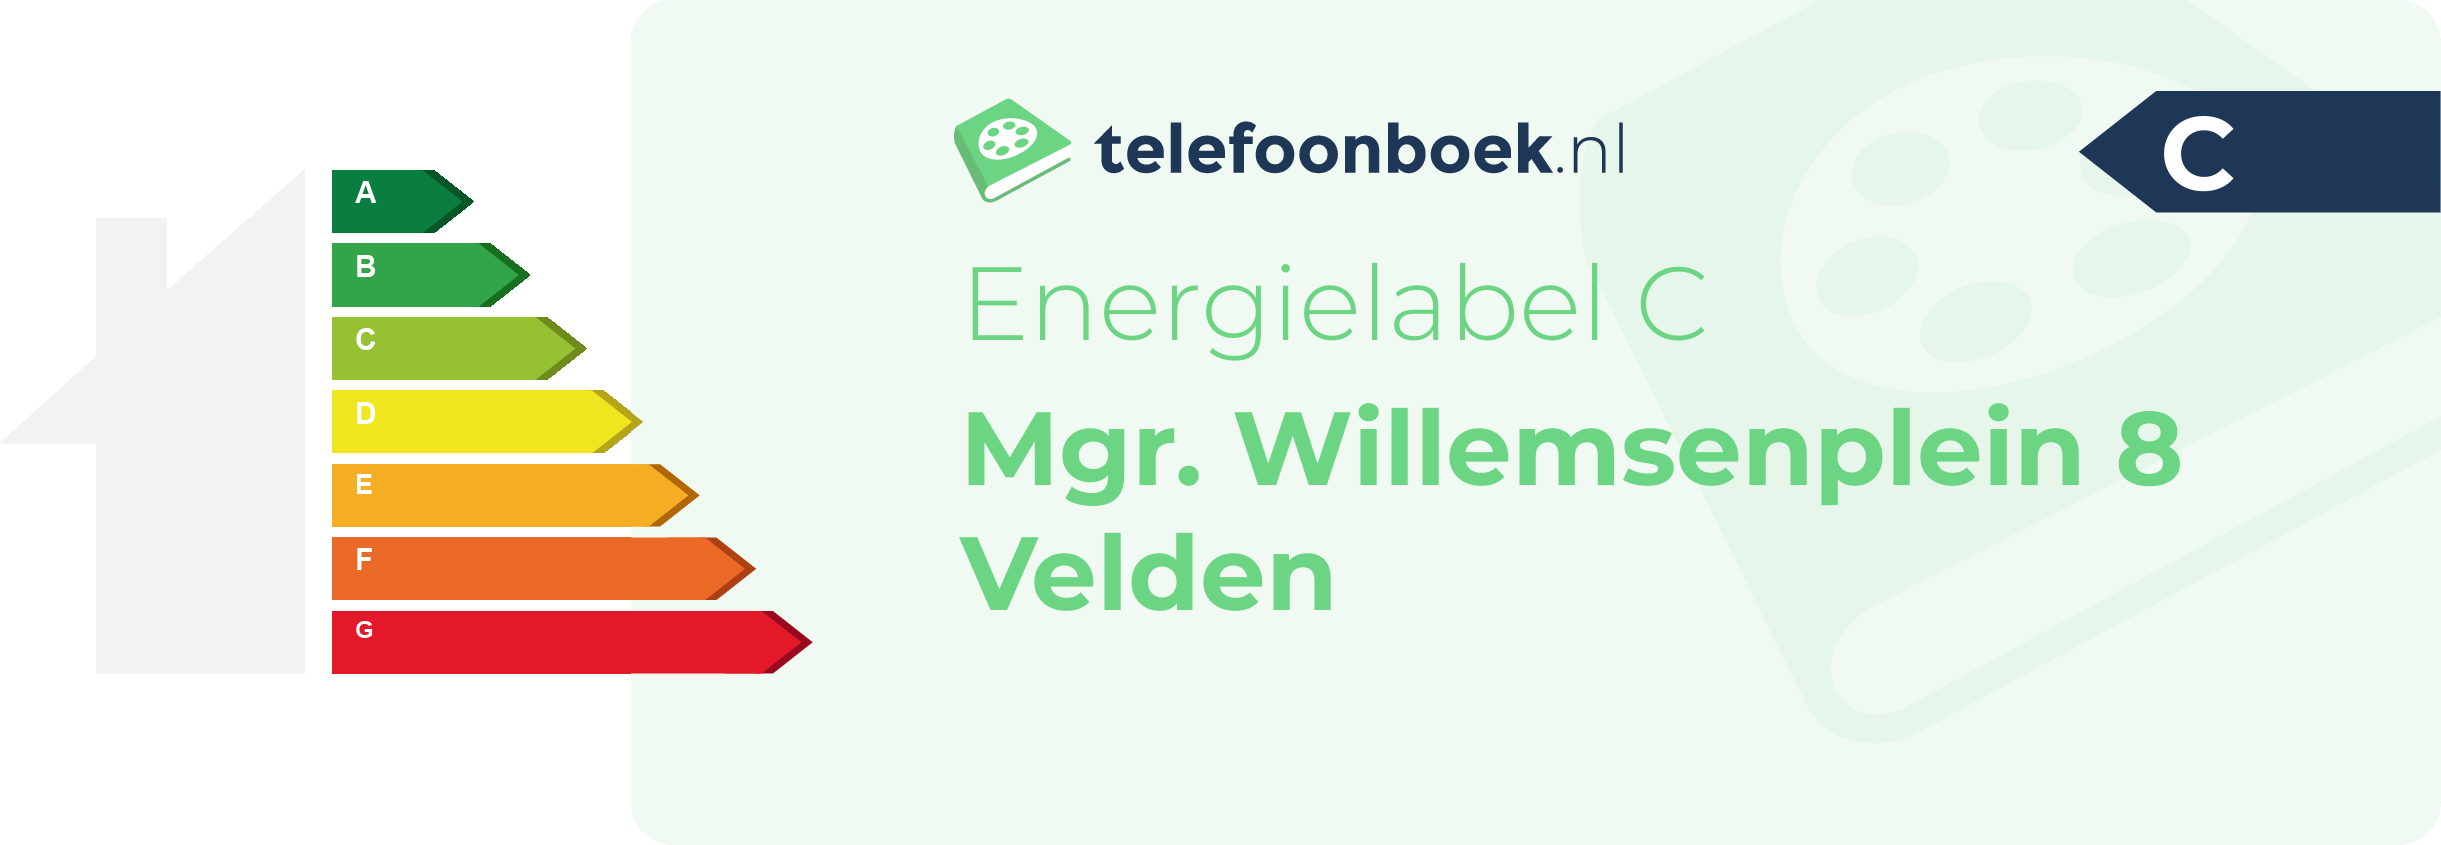 Energielabel Mgr. Willemsenplein 8 Velden